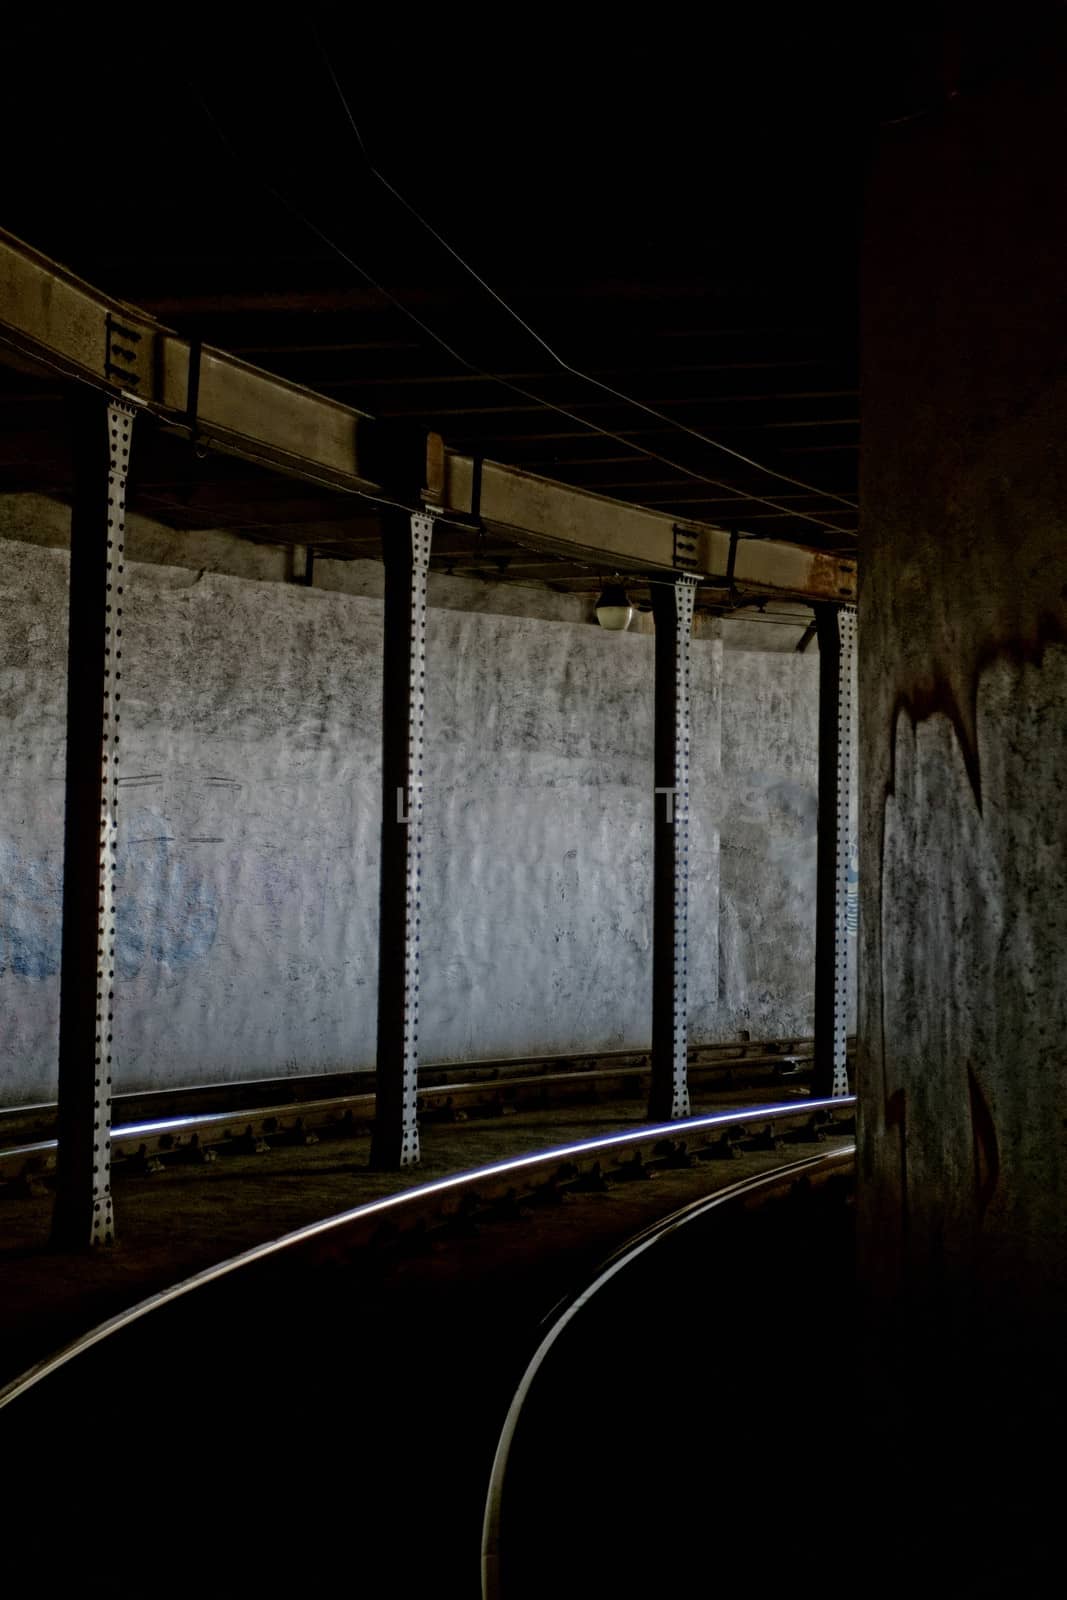 rail tunnel with graffiti